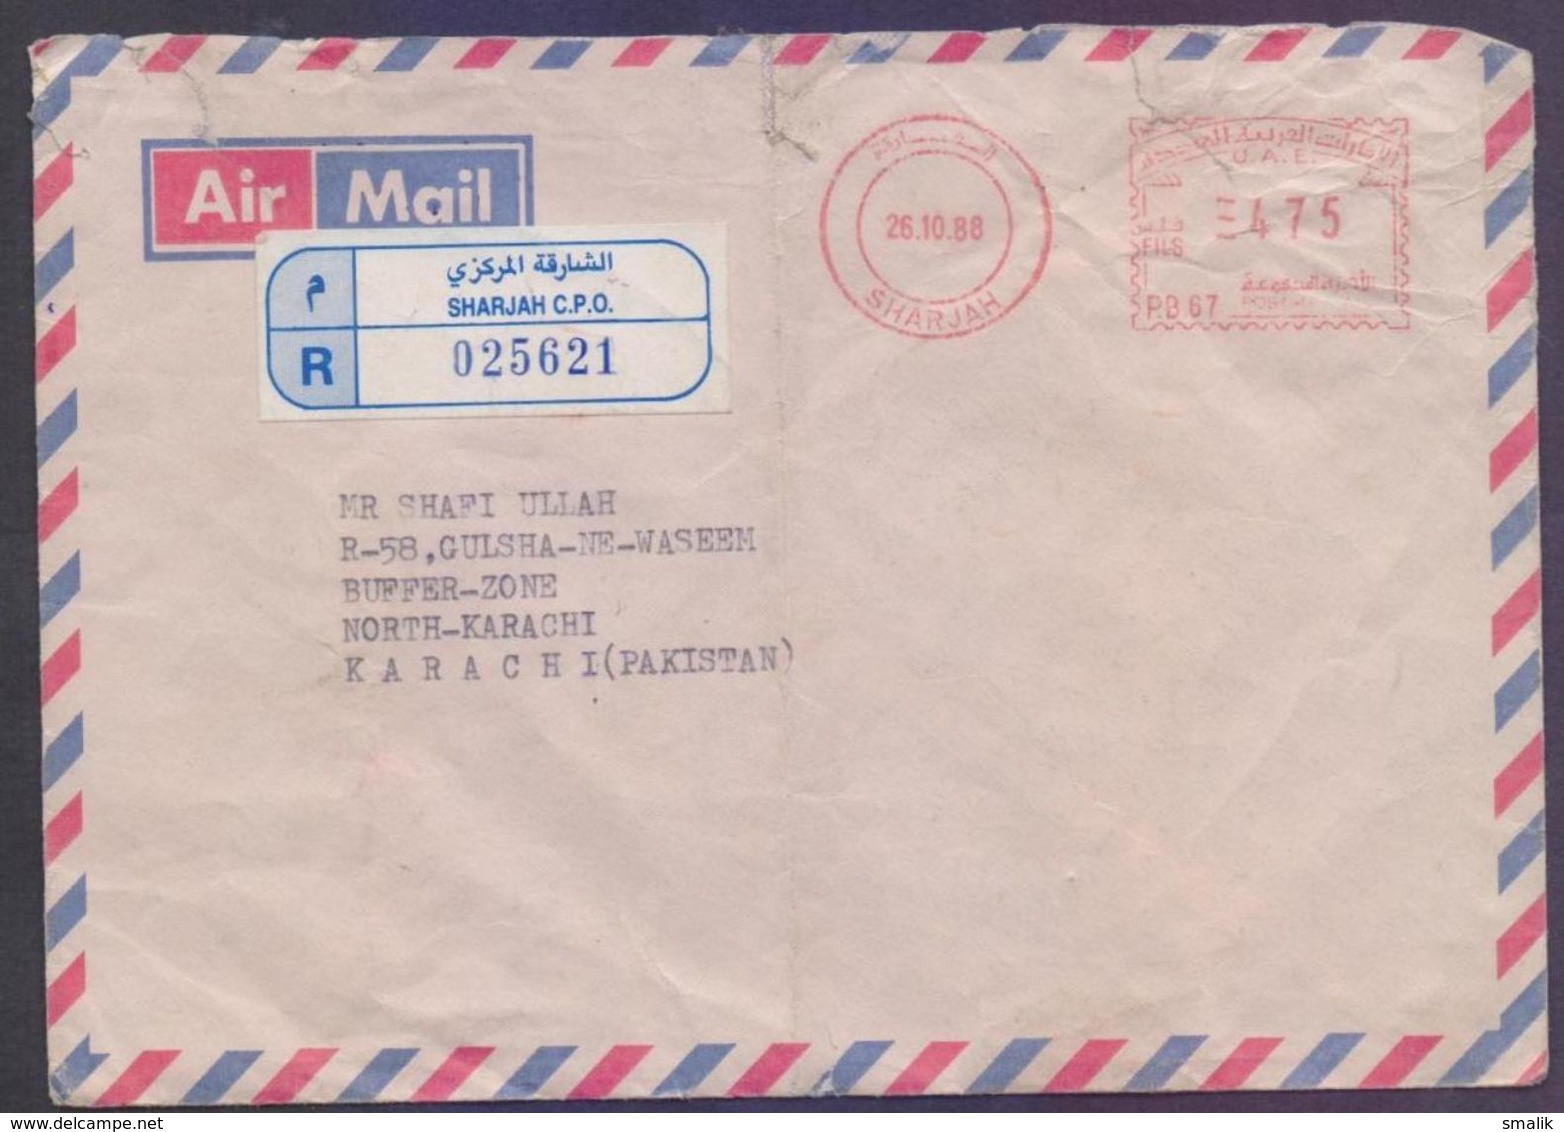 UAE United Arab Emirates Postal History, Meter Franking Cover Used 1988 Registered From SHARJAH - United Arab Emirates (General)